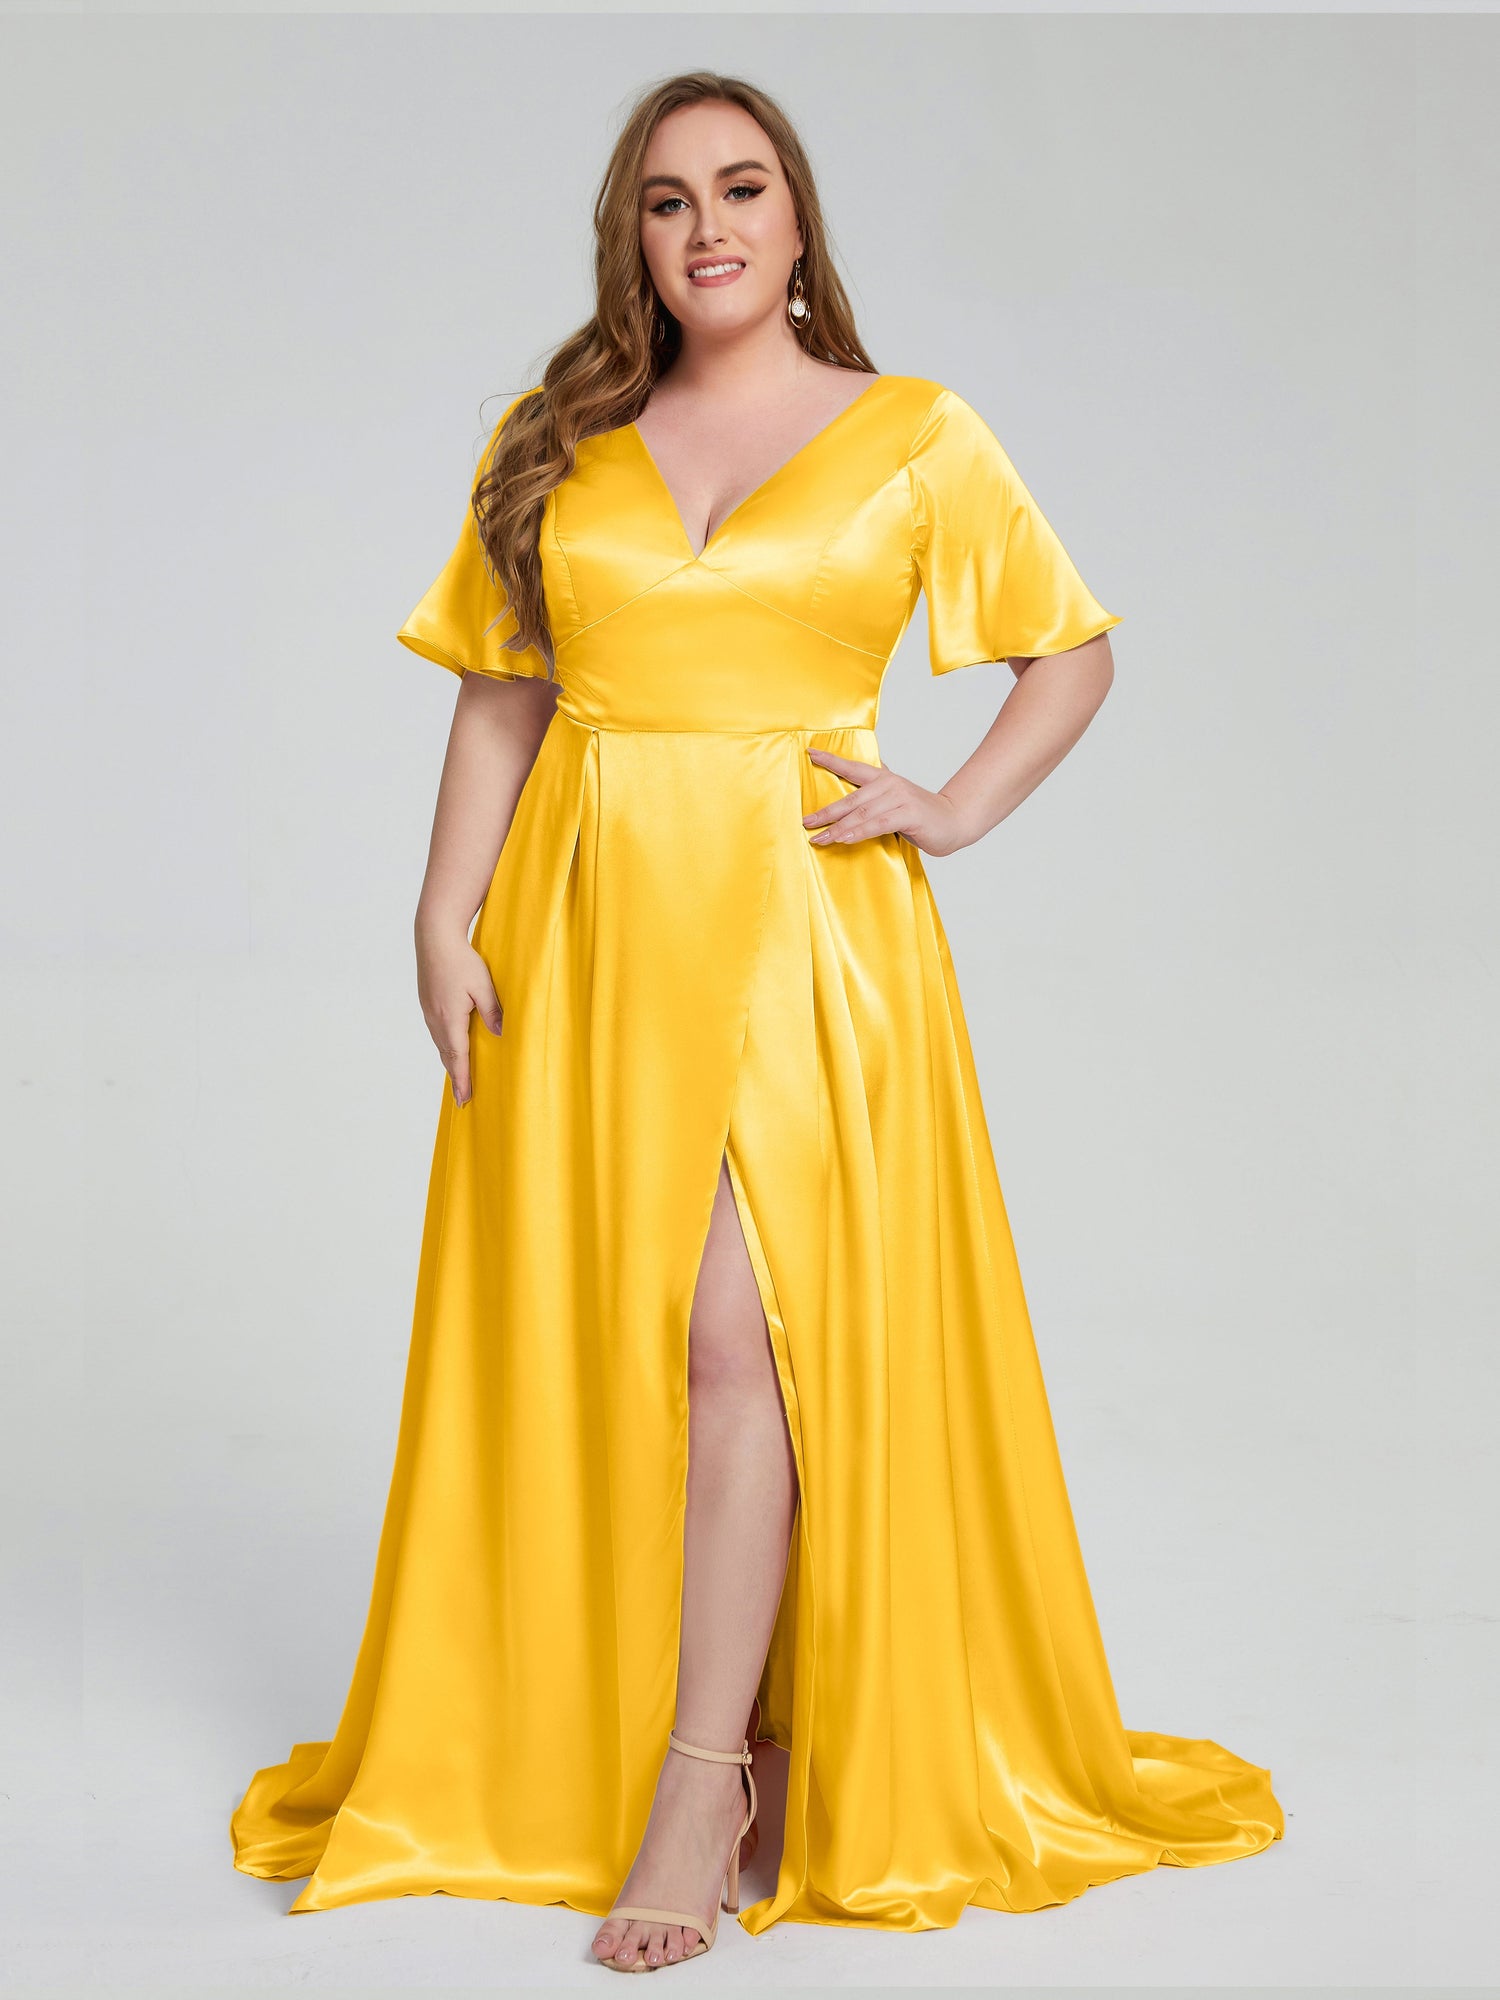 yellow dresses plus size